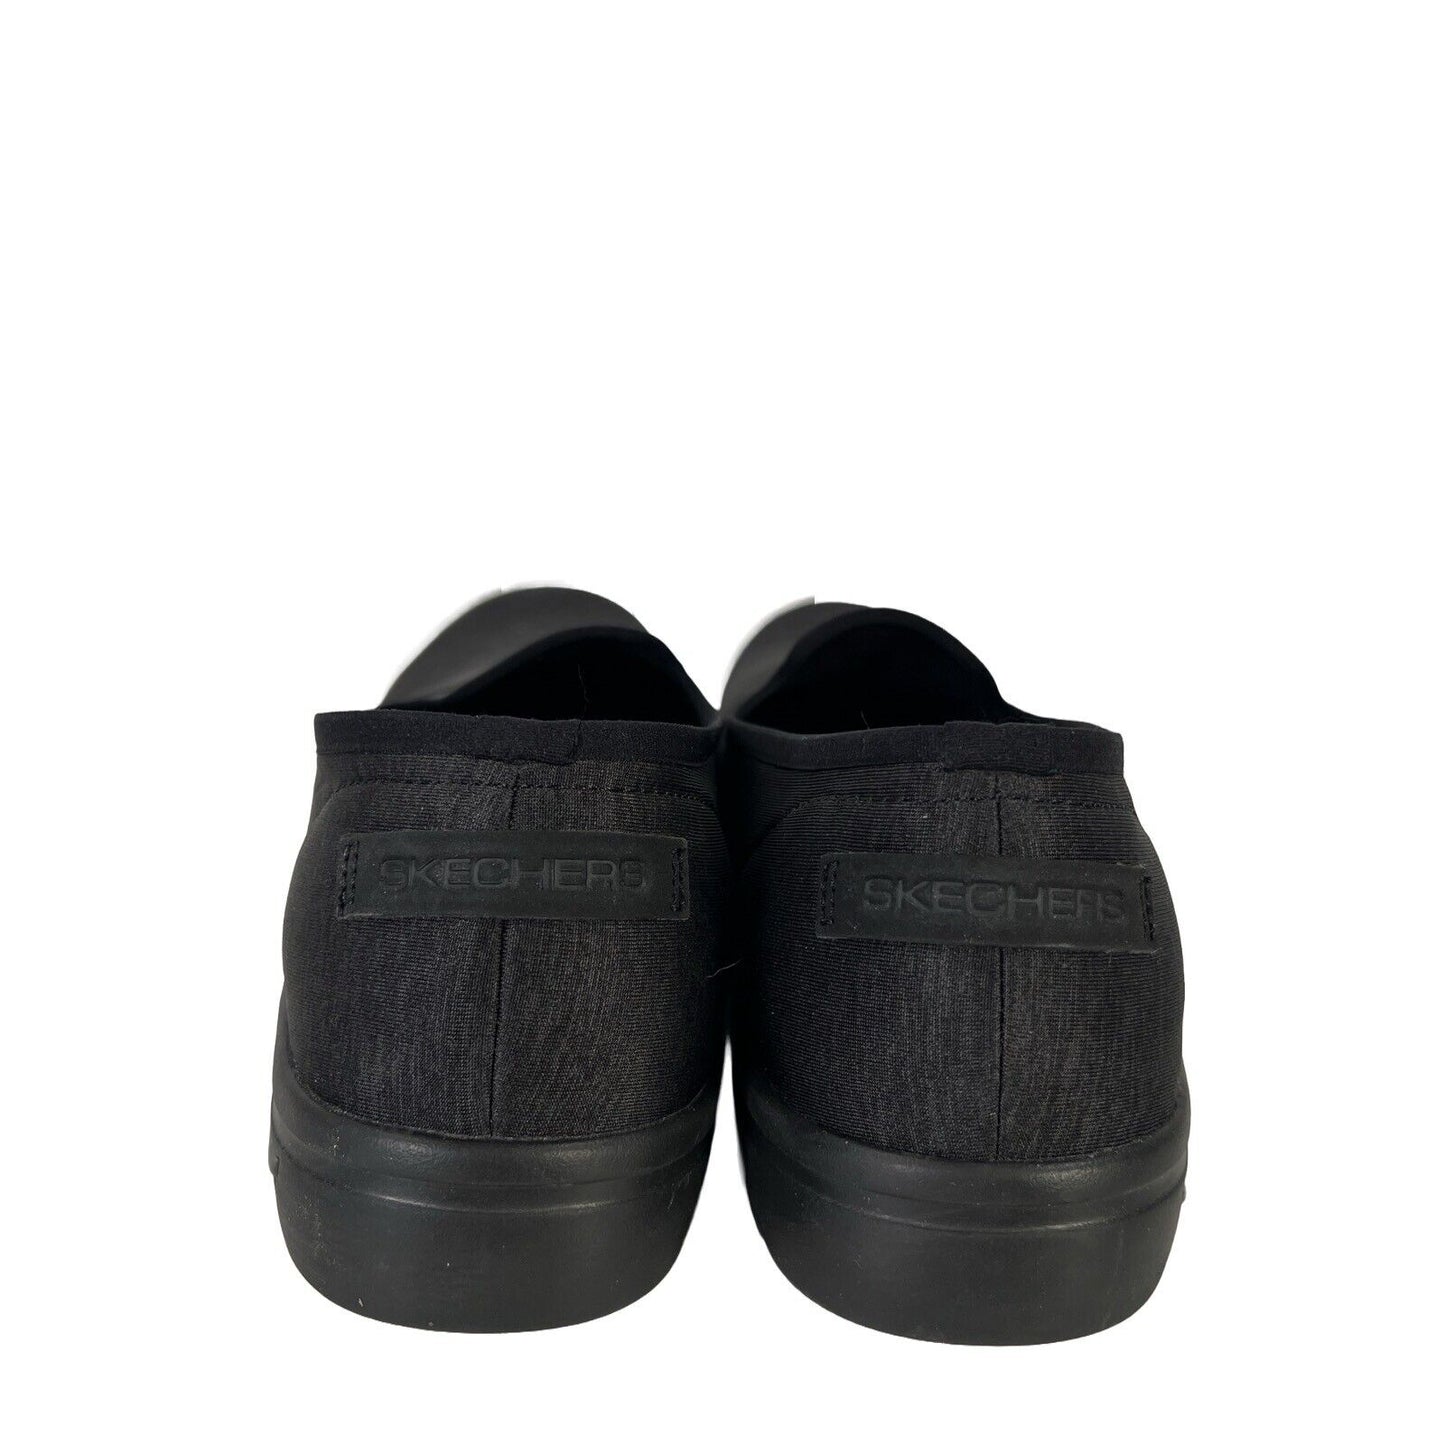 Skechers Women's Black Arch Fit Uplift Slip On Comfort Loafer Flats - 9